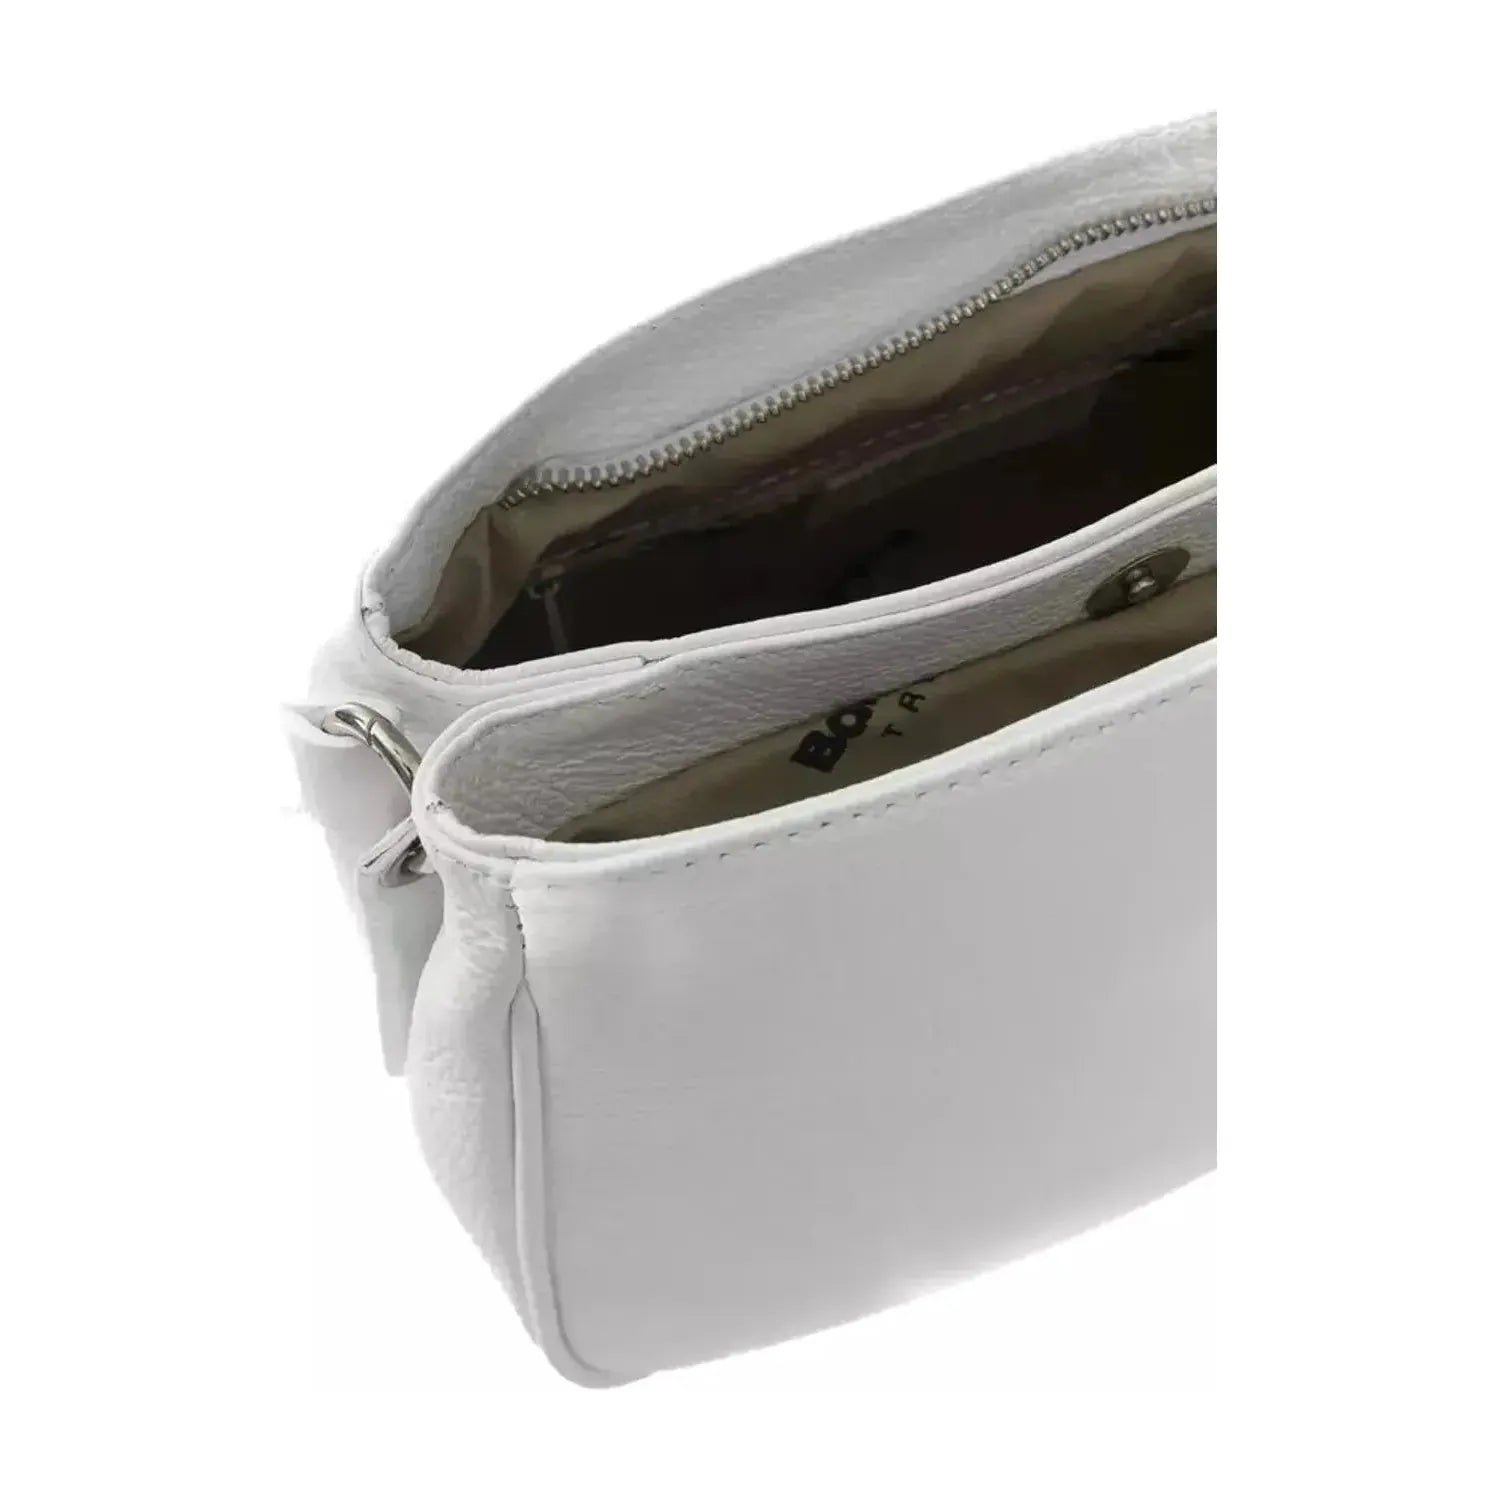 Baldinini Trend | White Cowhide Crossbody Bag - McRichard Designer Brands